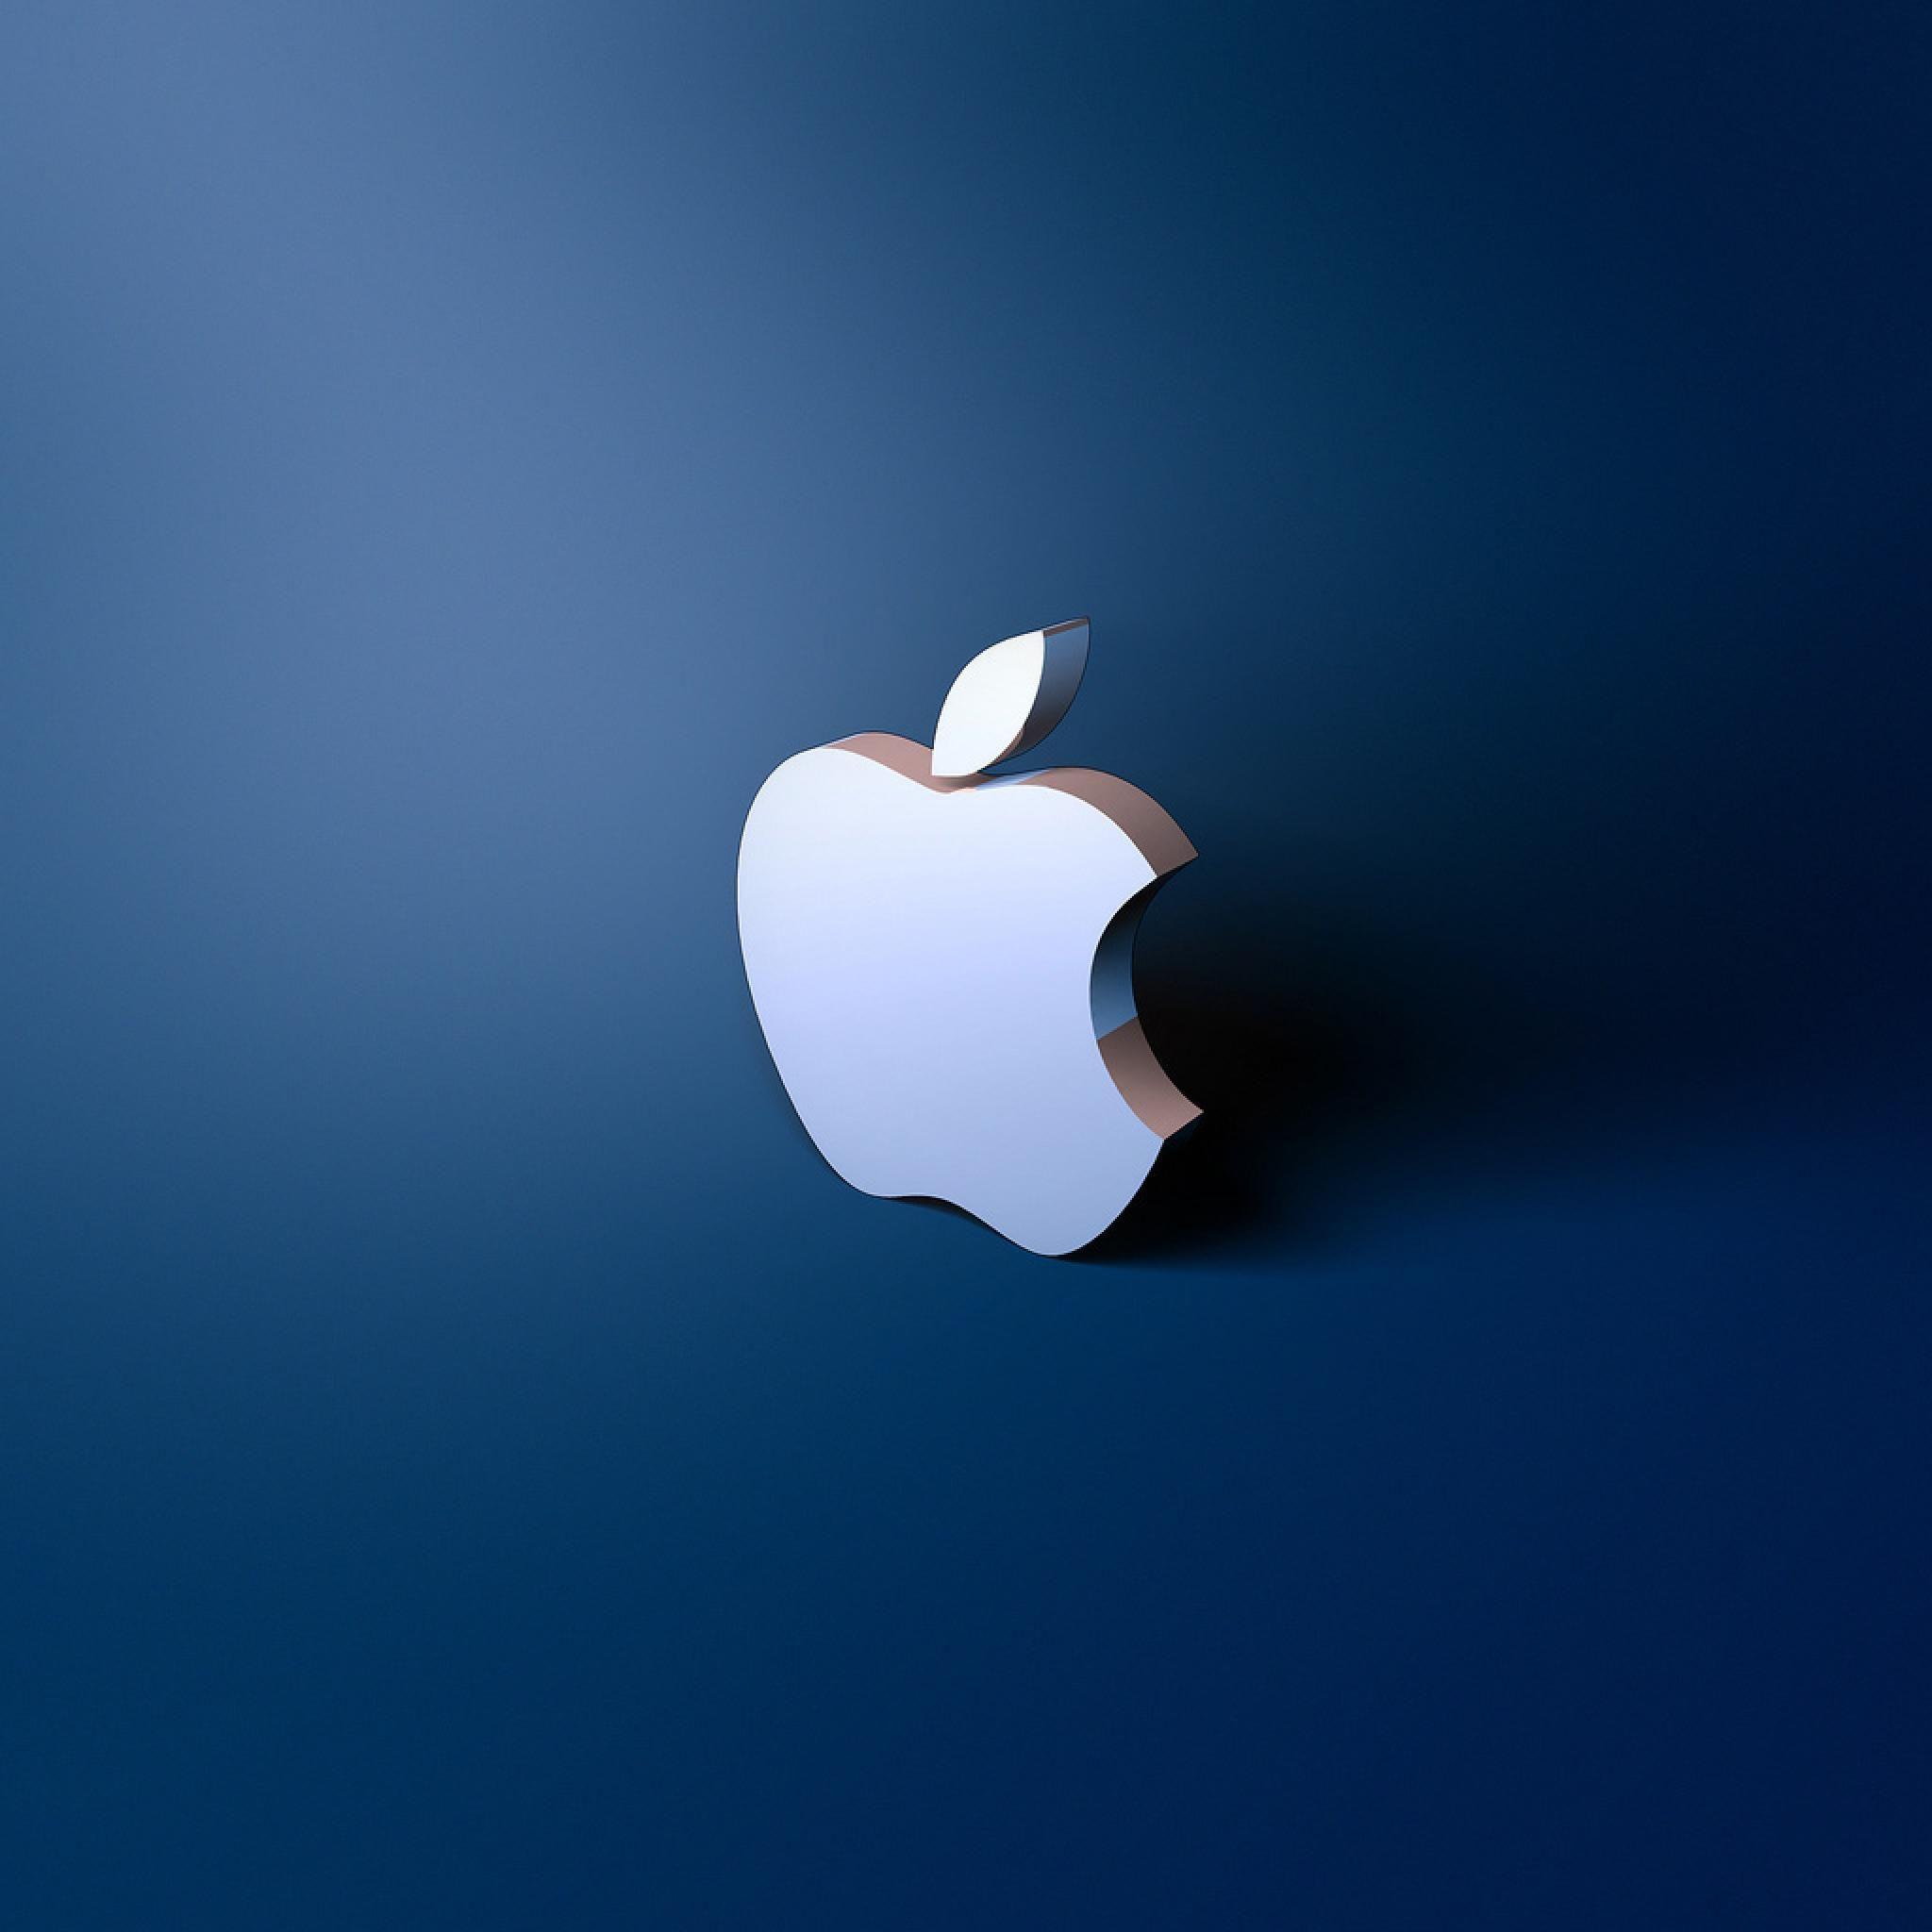 Blue Apple Logo Wallpapers - Top Free Blue Apple Logo Backgrounds -  WallpaperAccess